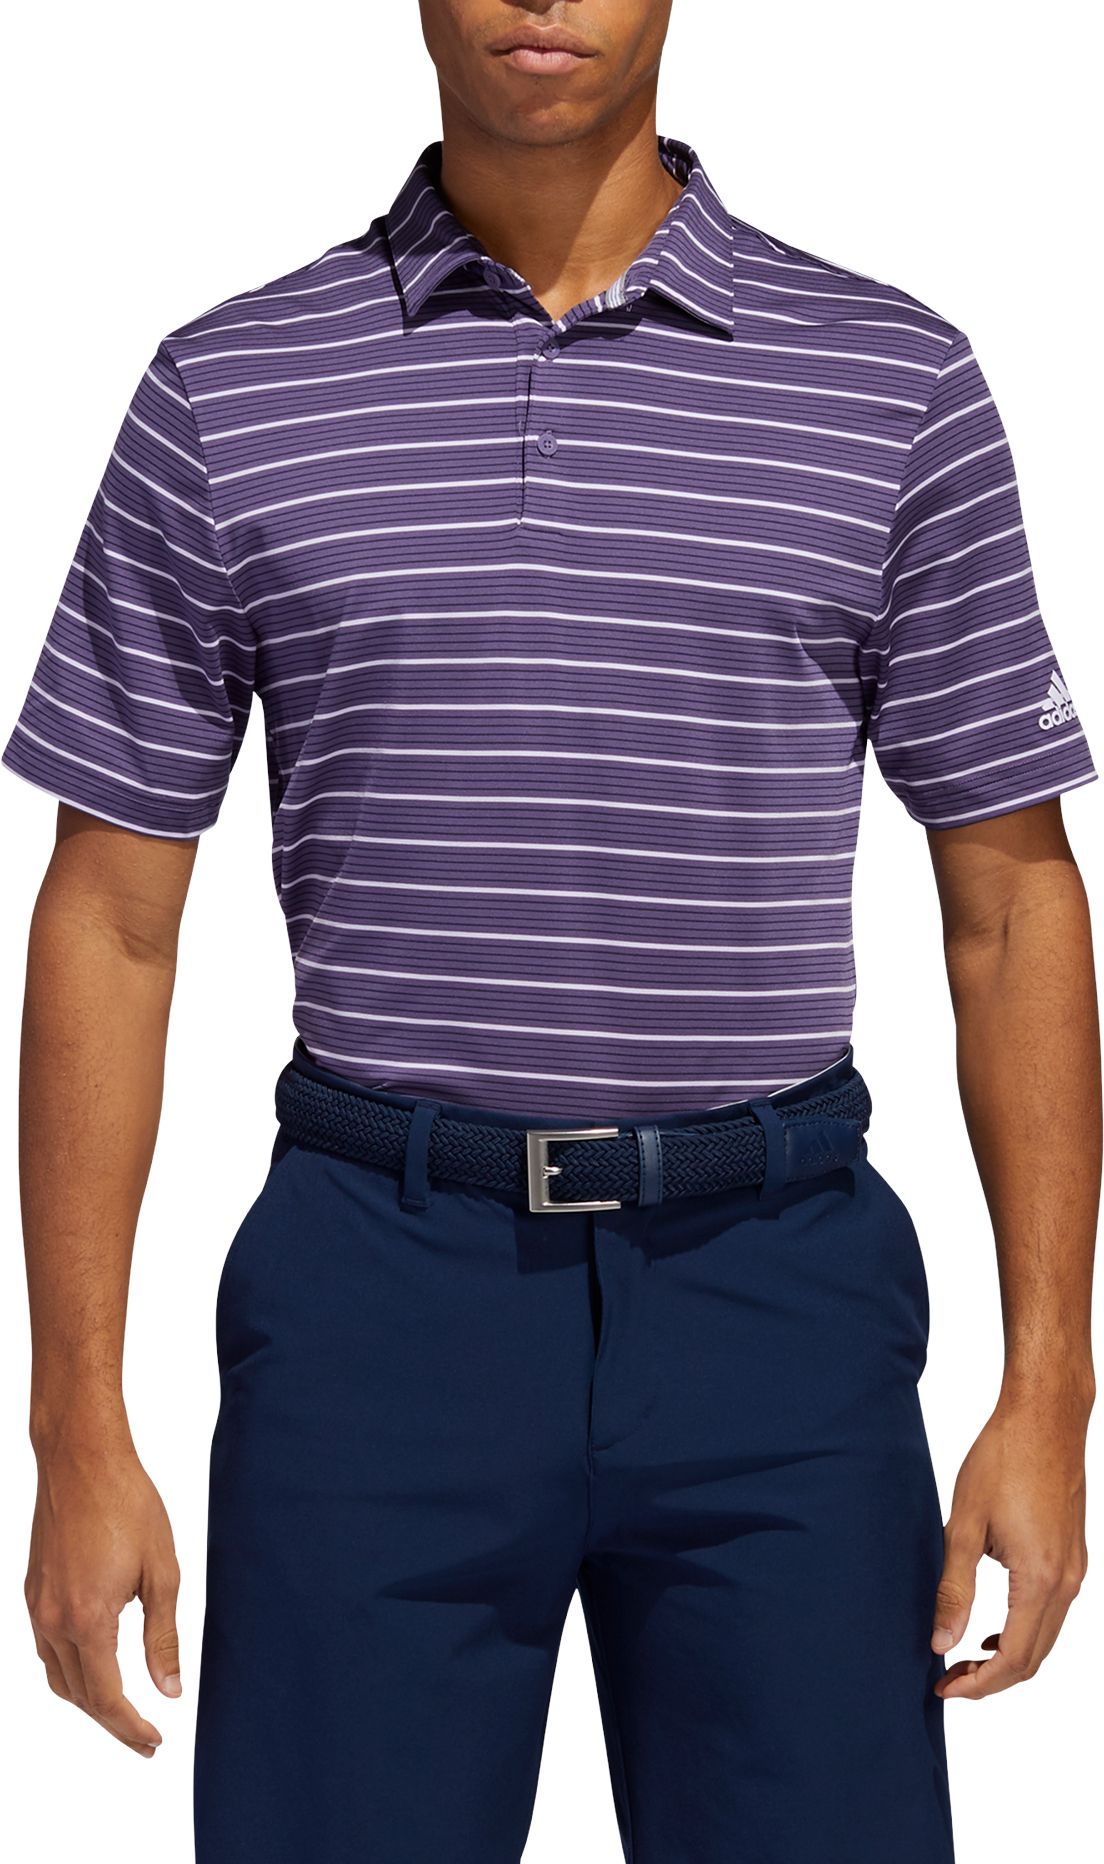 purple adidas golf shirt